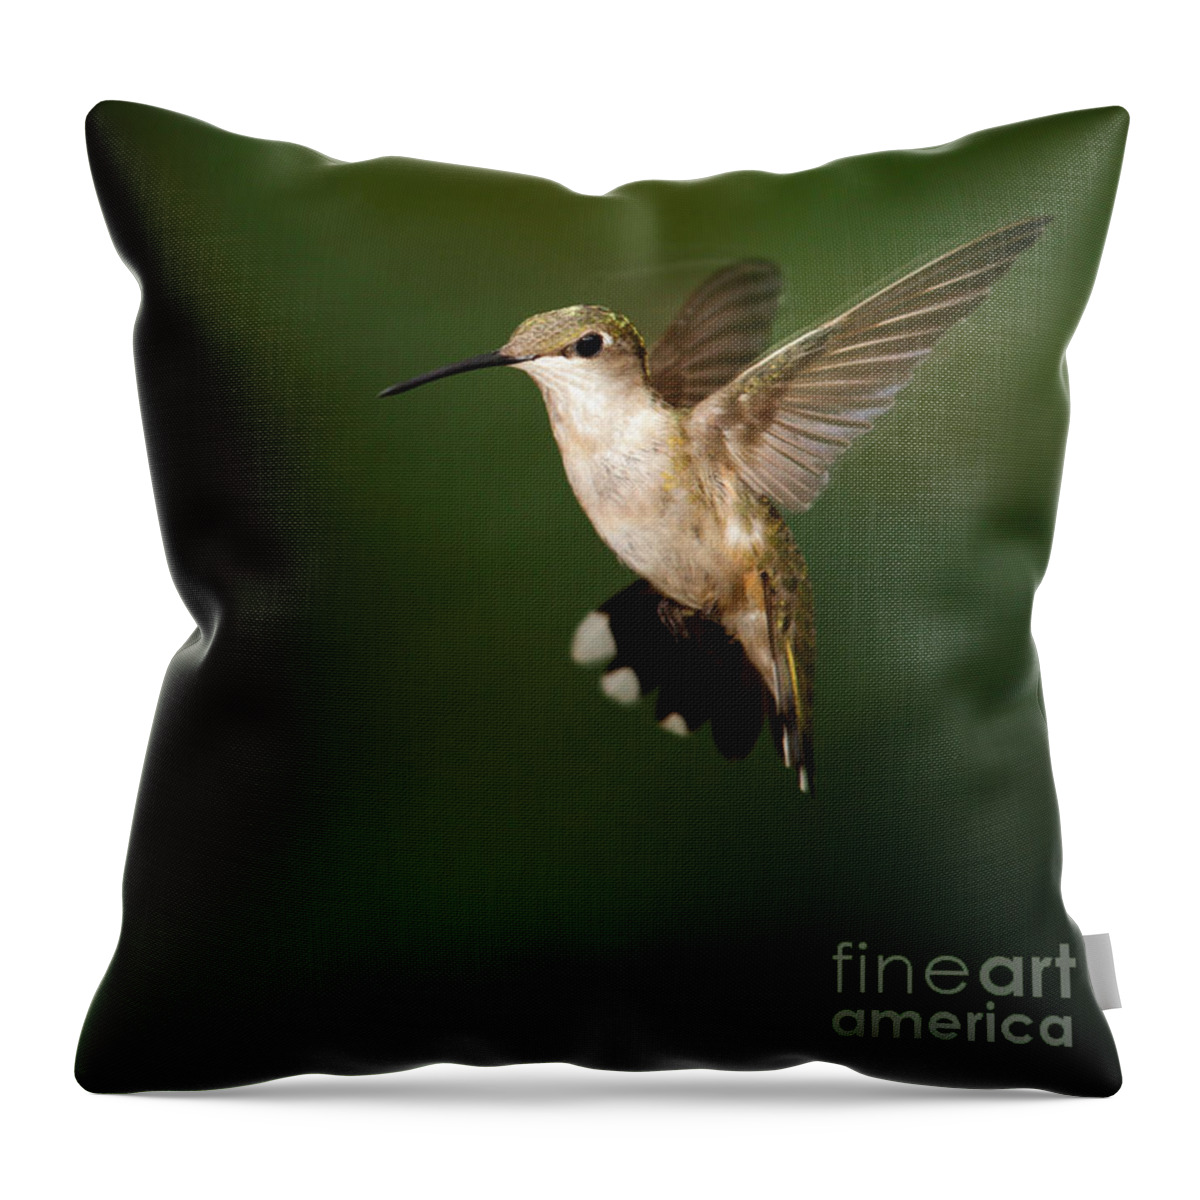 Alabama Throw Pillow featuring the photograph Hovering Hummingbird by Sabrina L Ryan